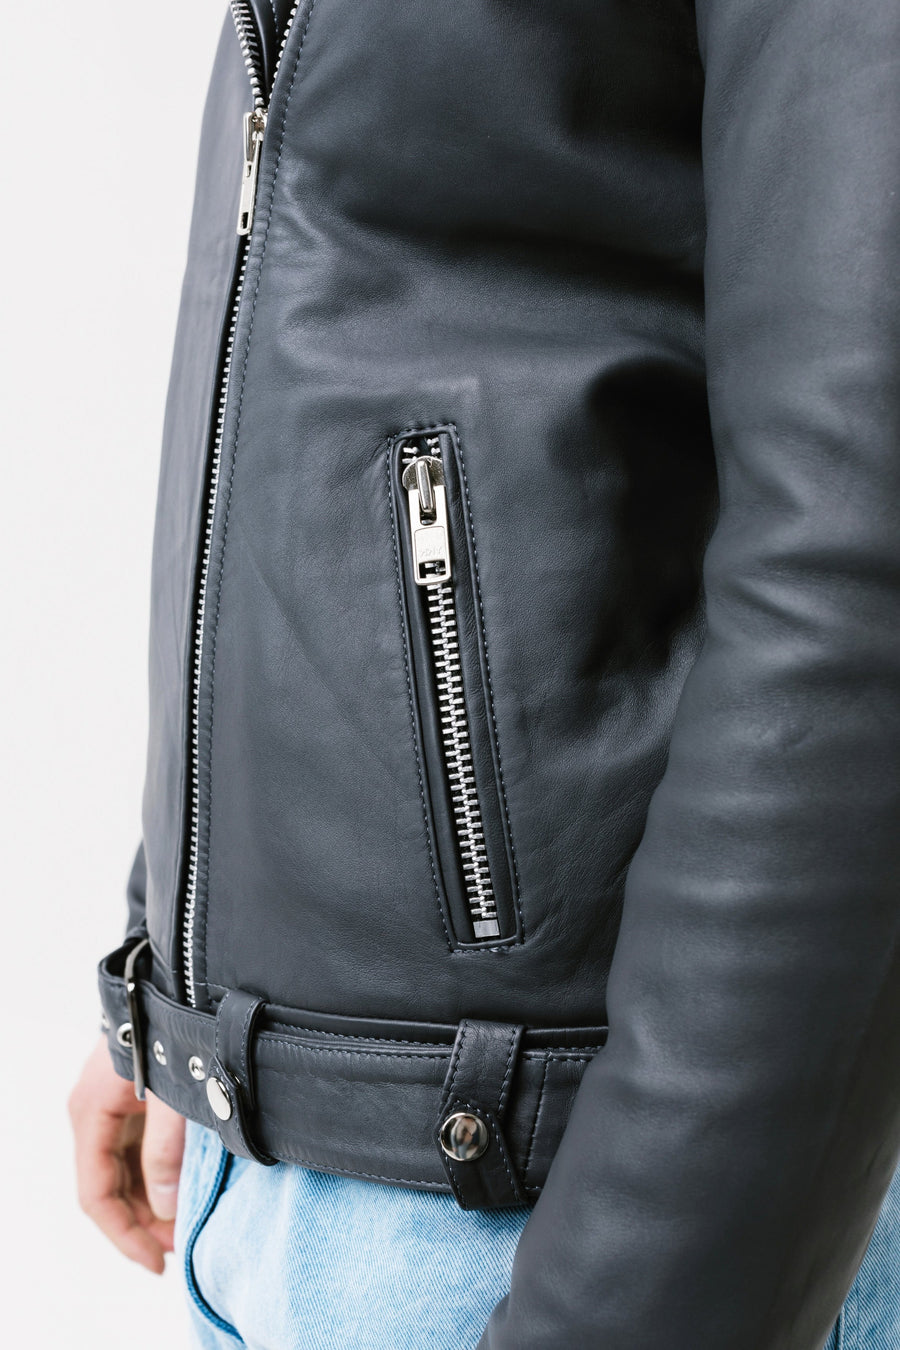 Warehouse Biker Leather Jacket | Ares 2.0